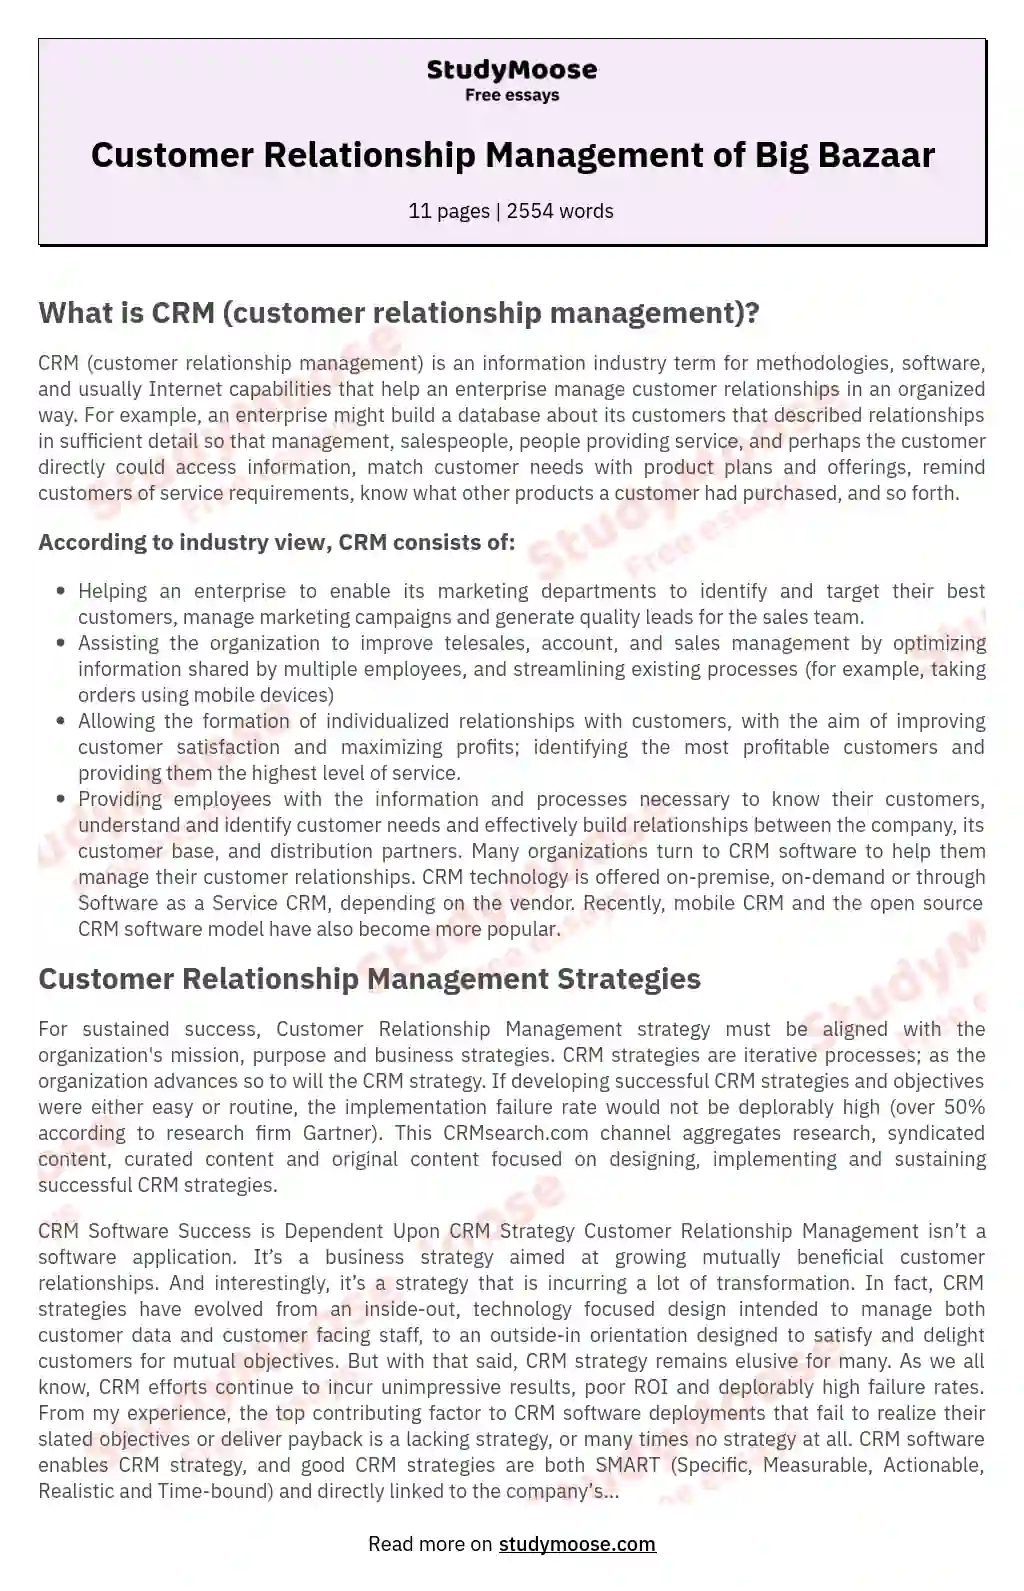 Customer Relationship Management of Big Bazaar essay